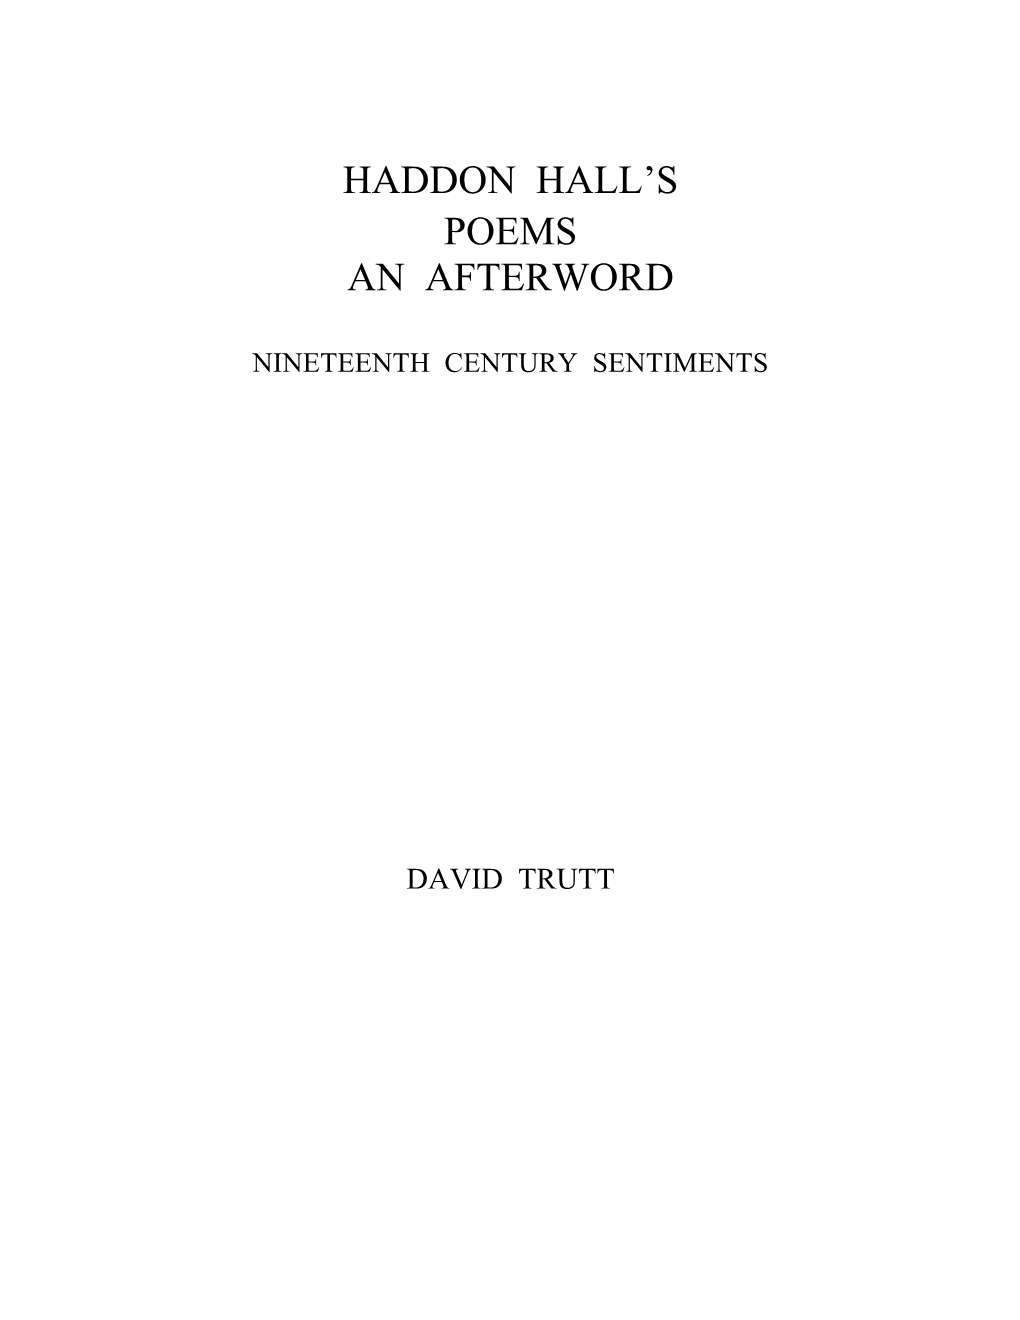 Haddon Hall's Poems an Afterword